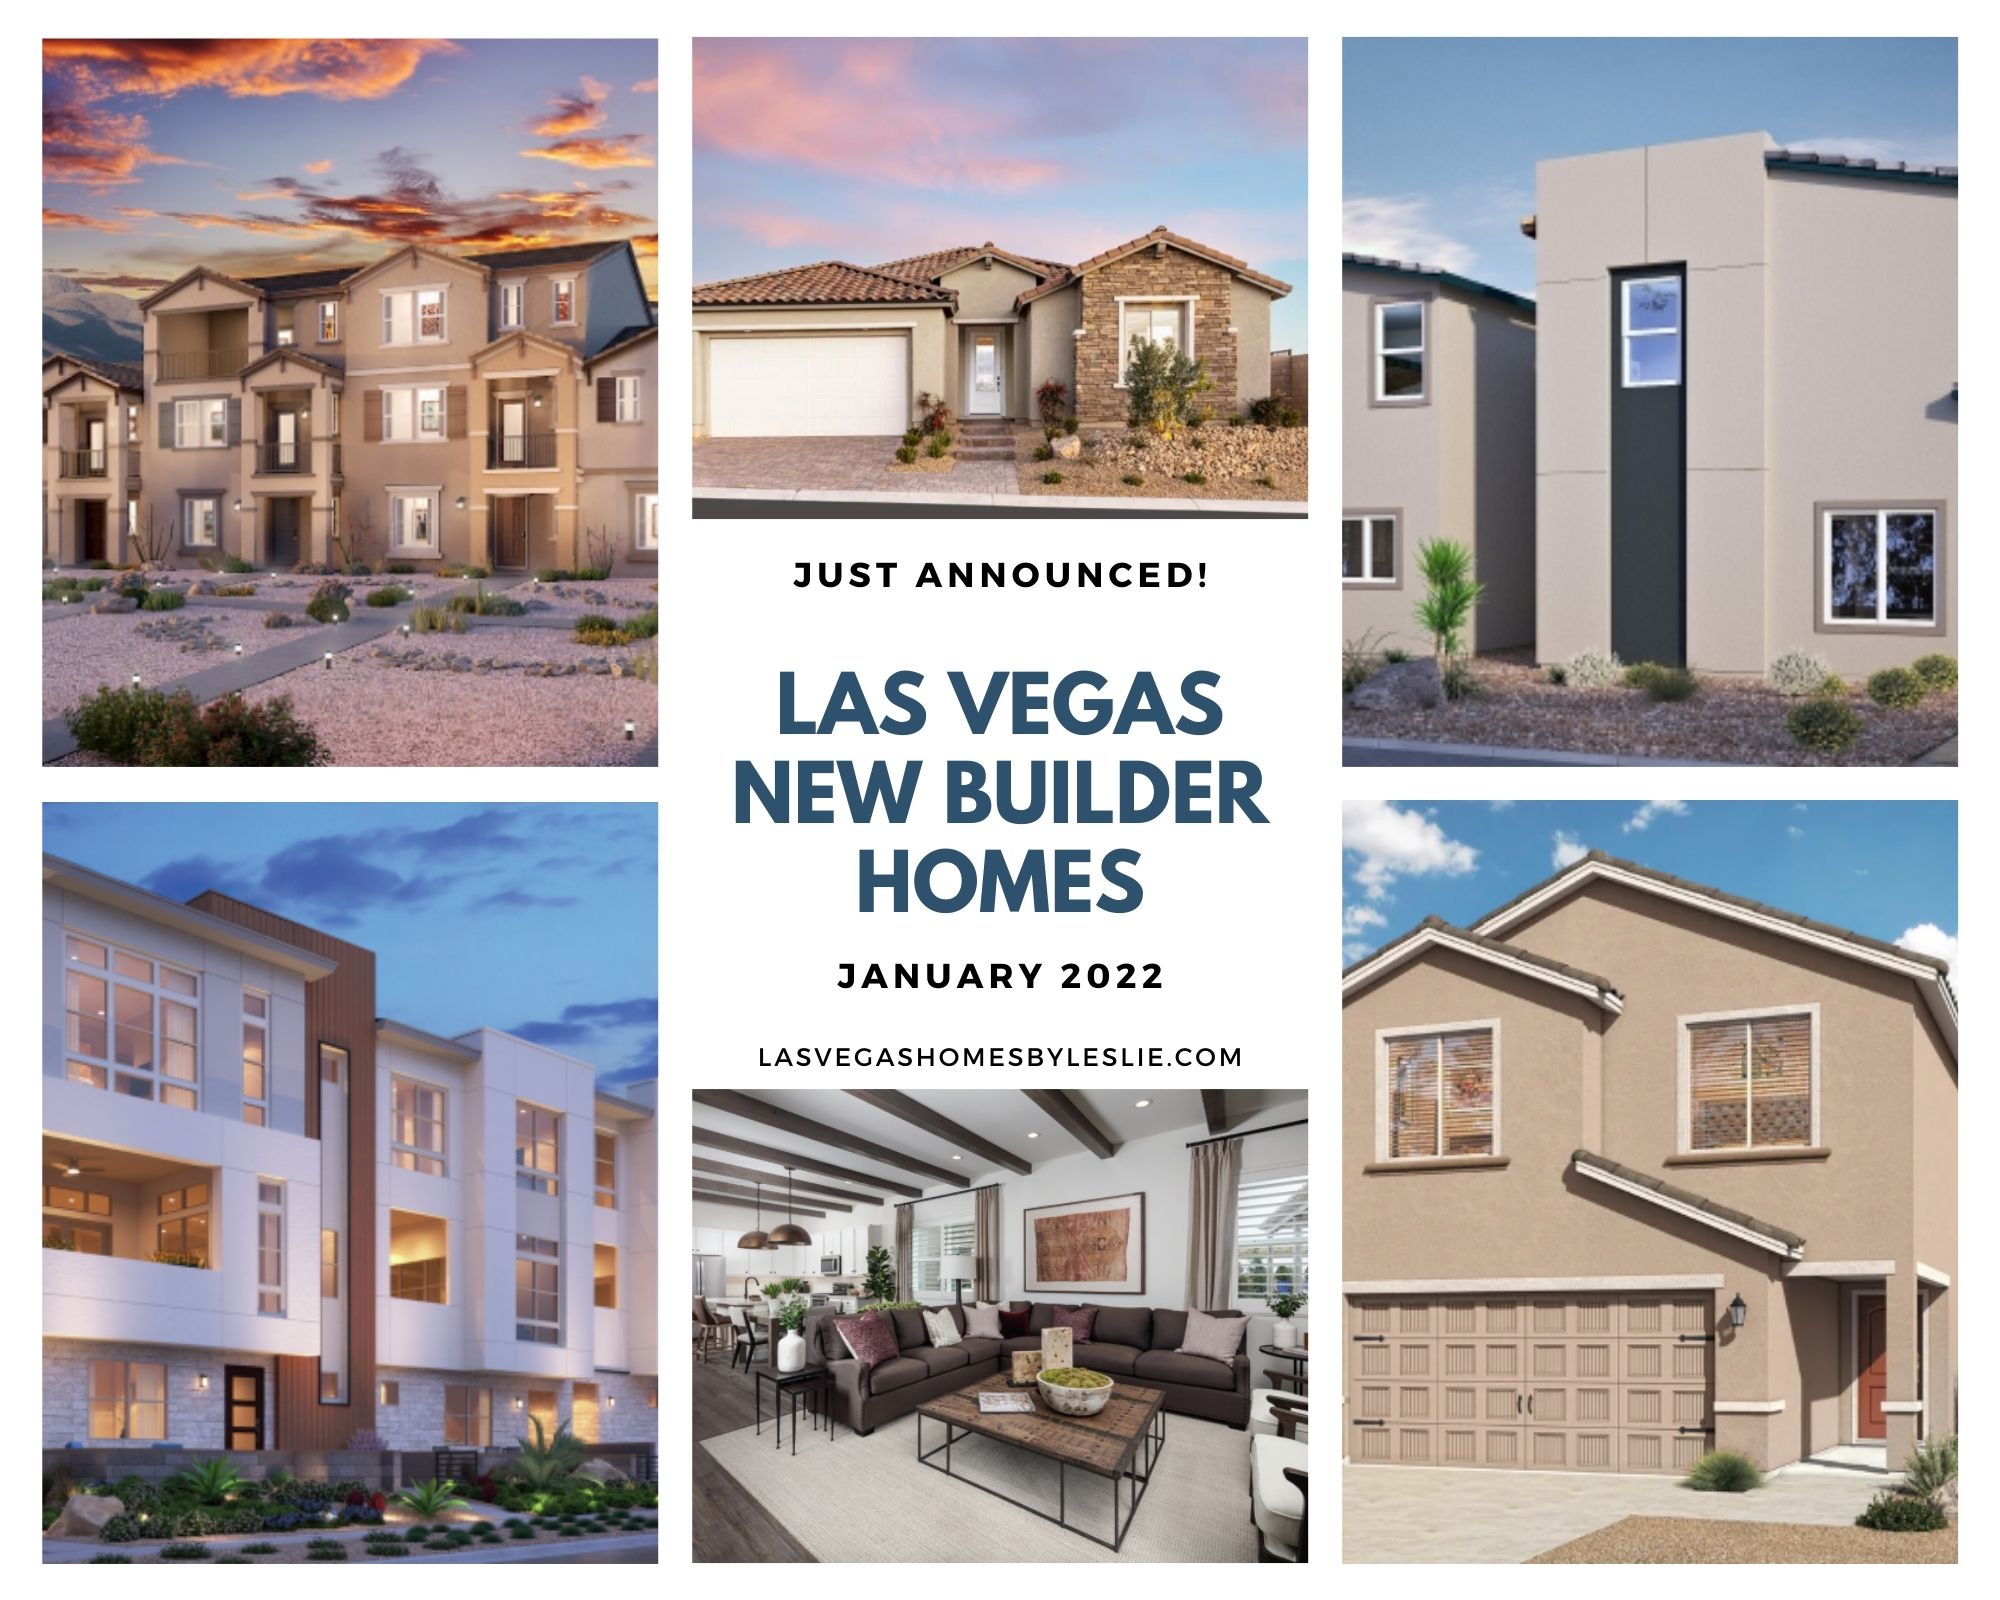 New builder homes in Las Vegas for January 2022